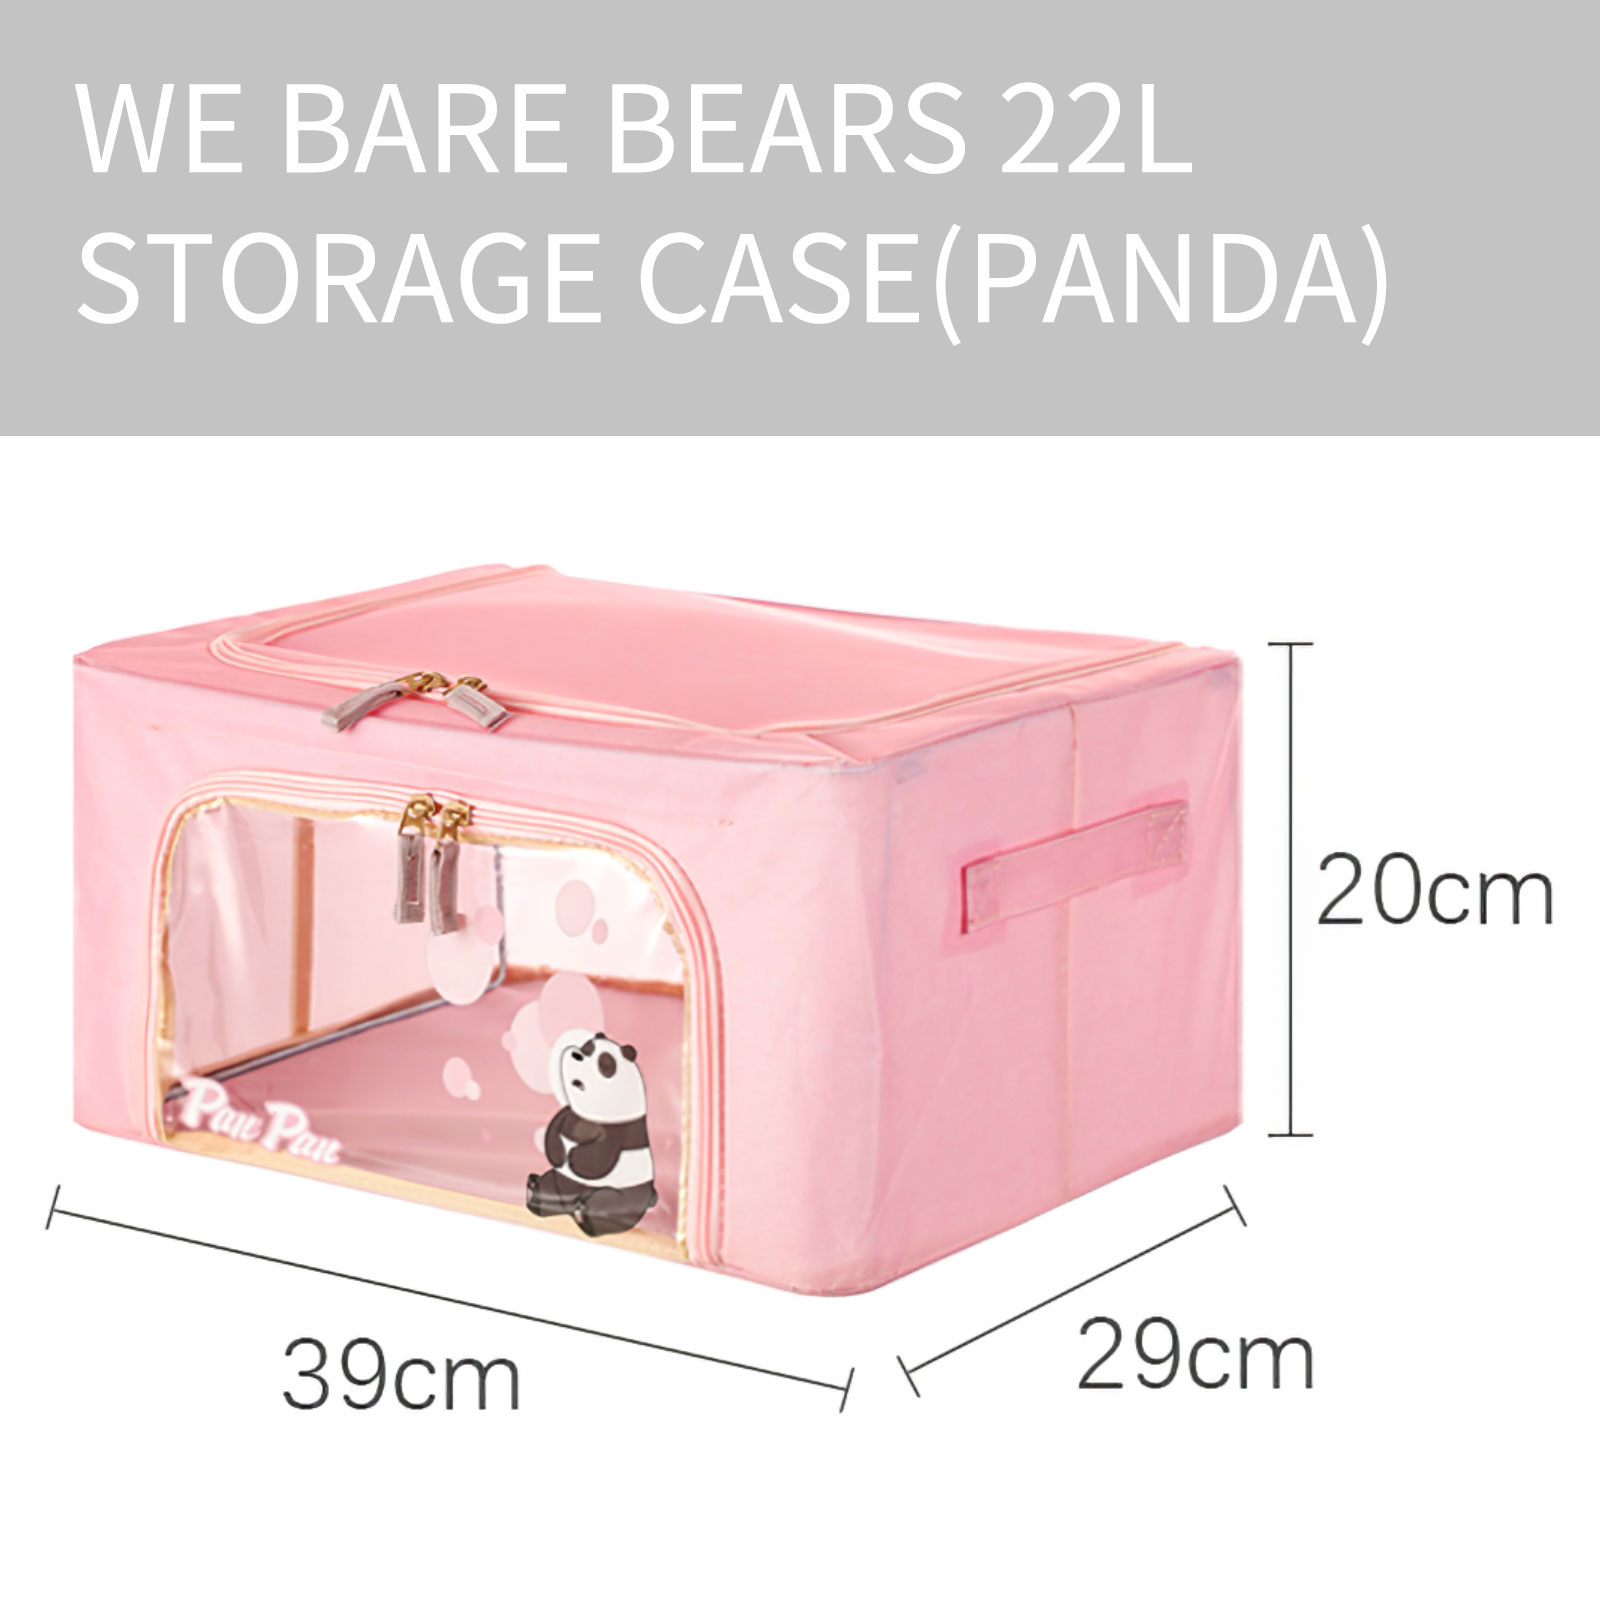 We Bare Bears 22L Baina Box Miniso